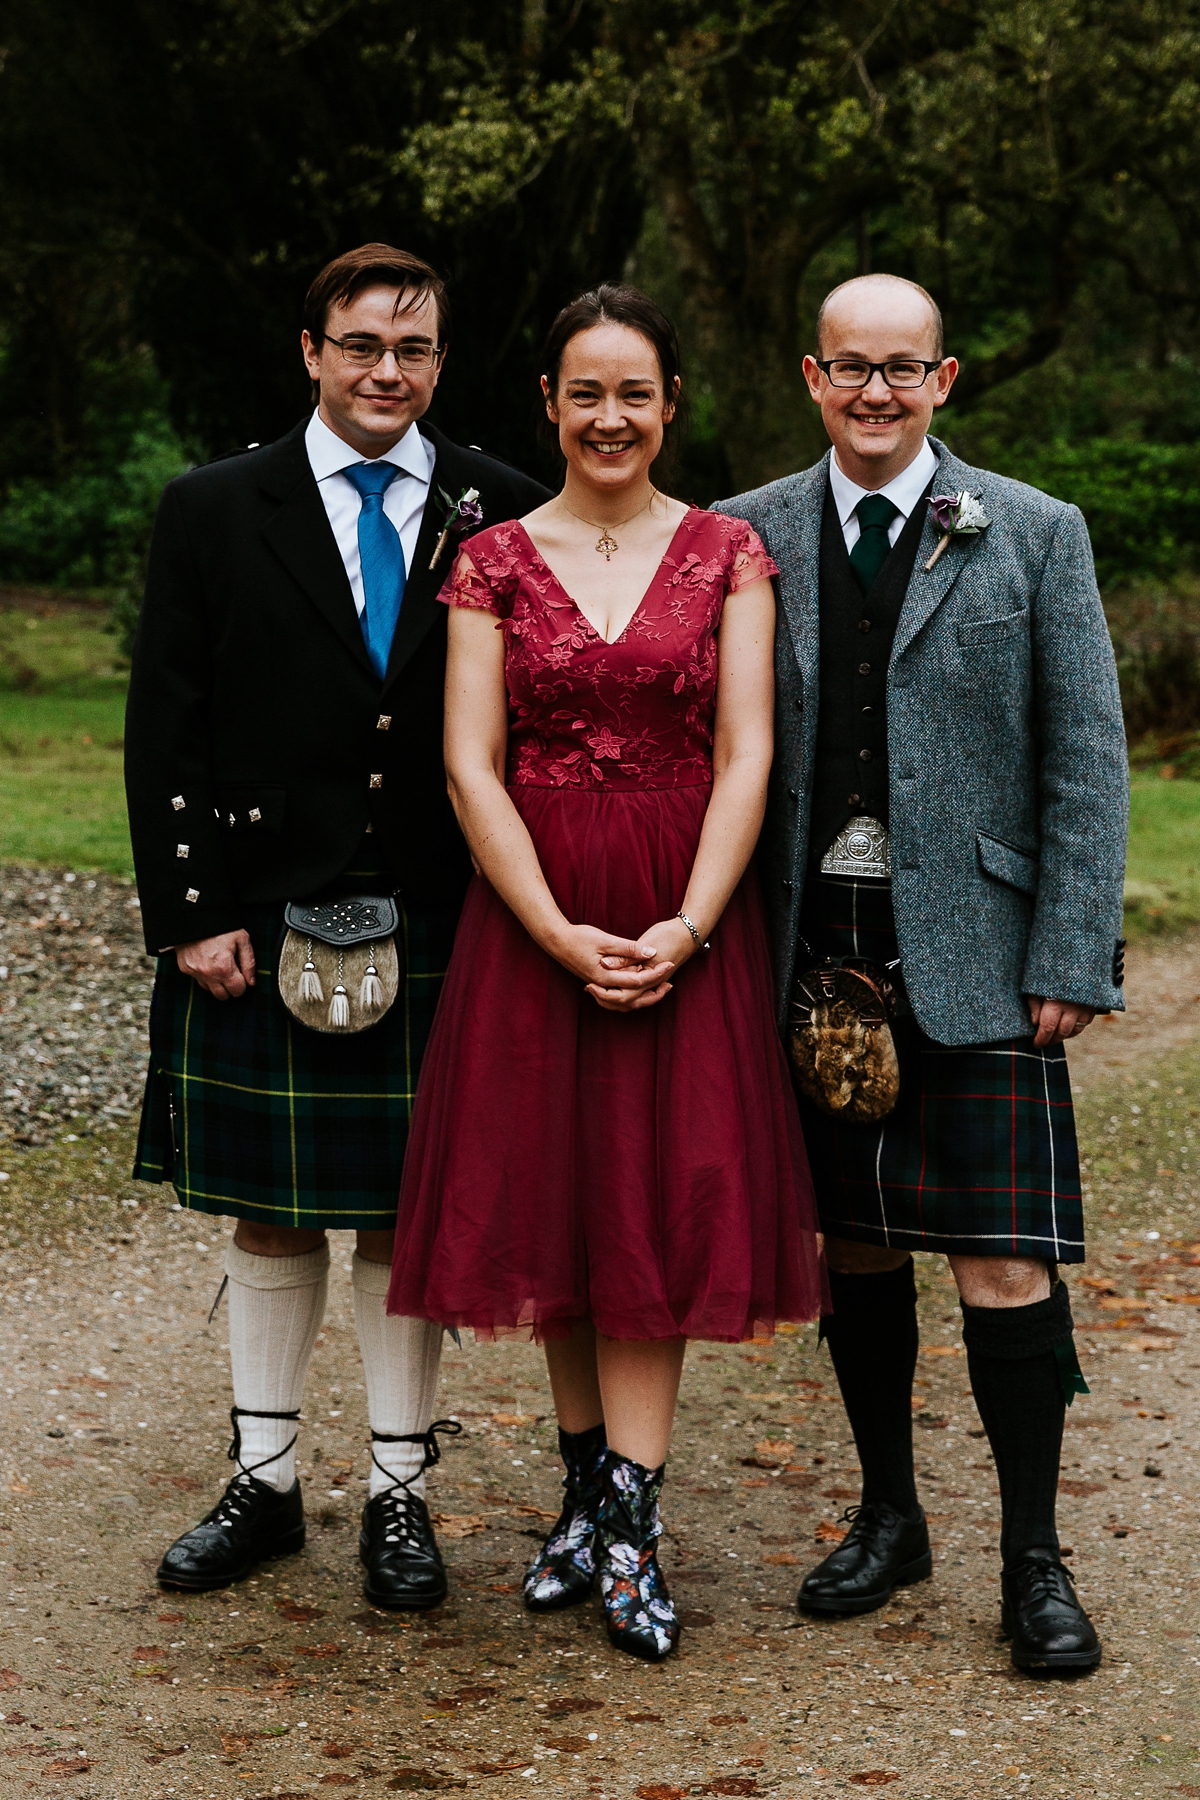 22 An intimate Scottish castle wedding